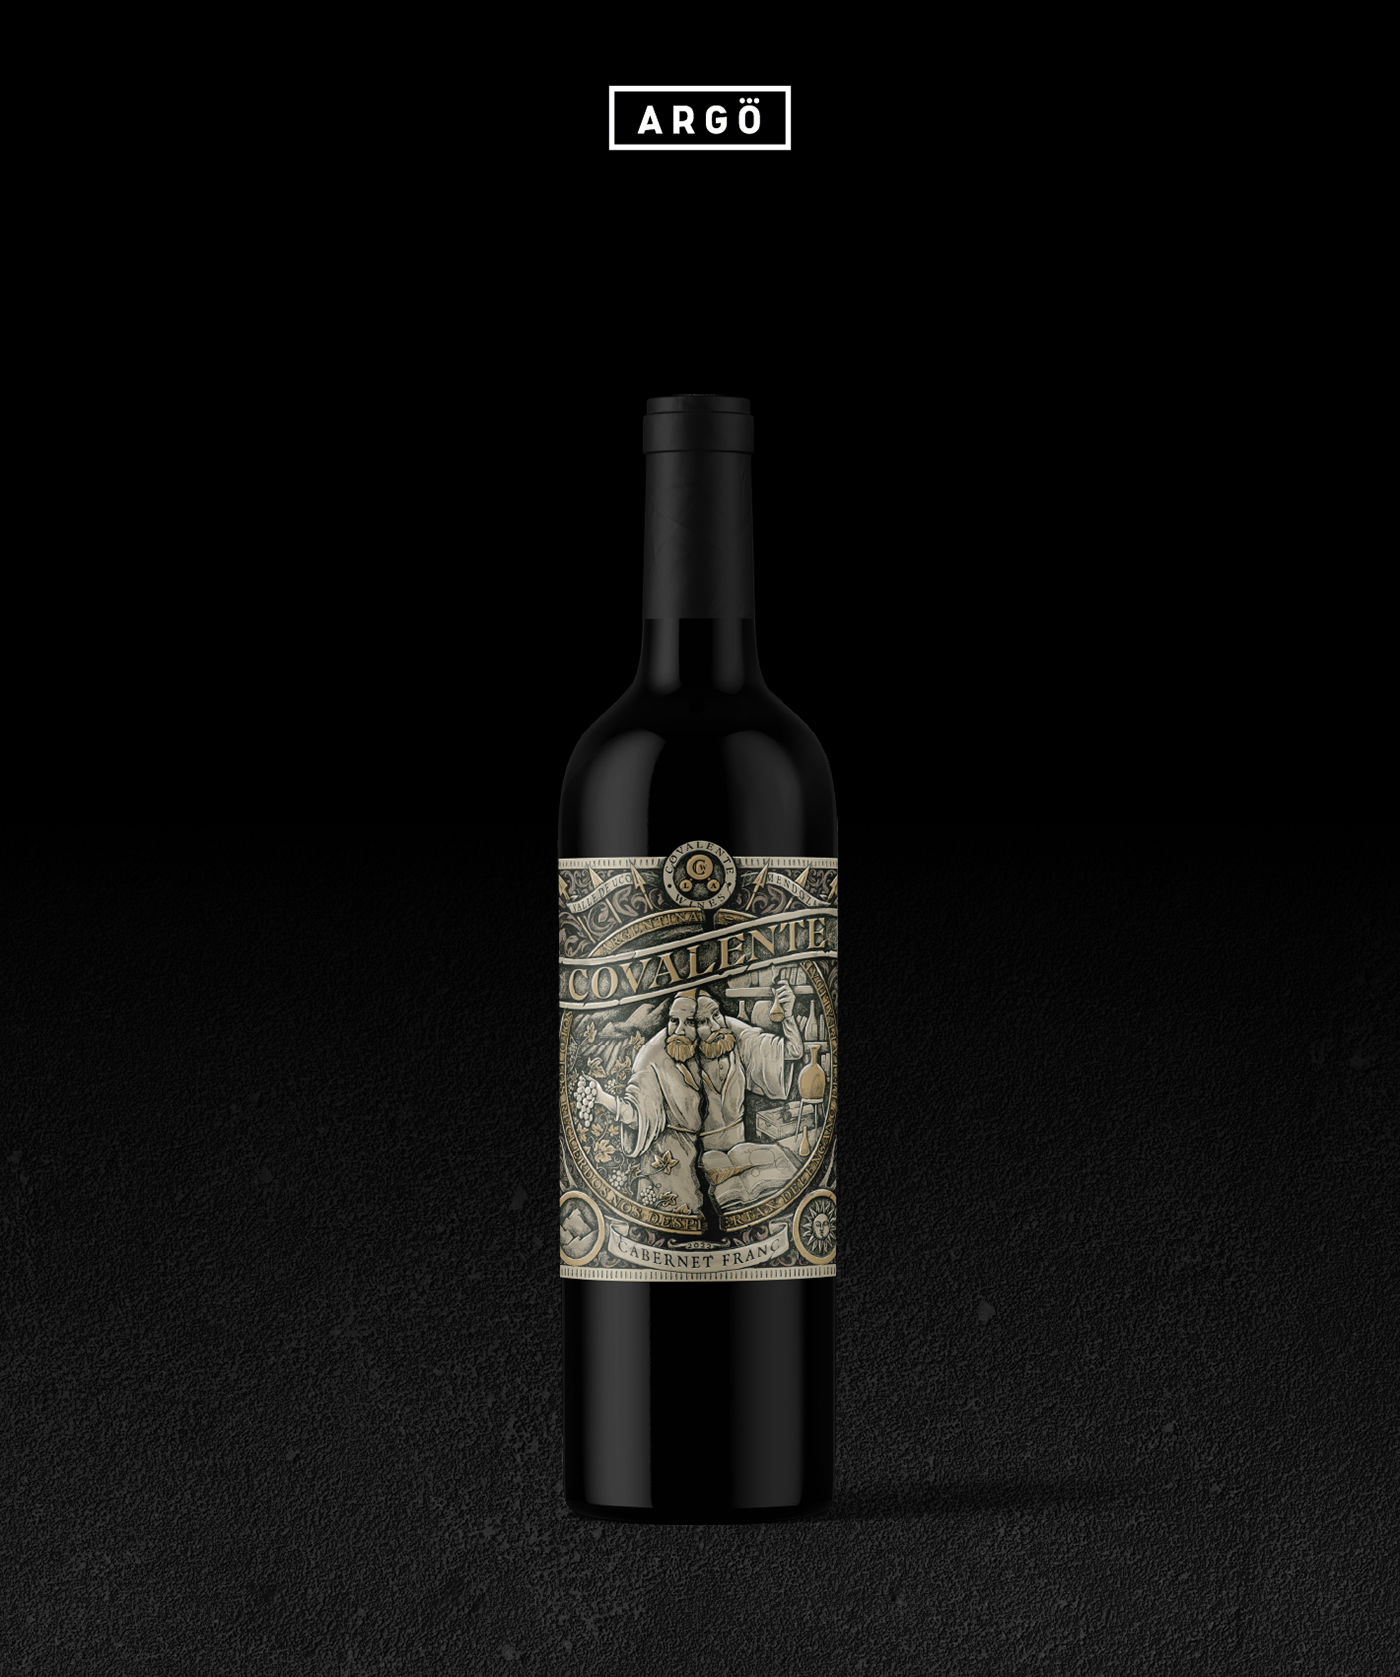 wine argo Malbec label design Packaging embalaje coin moneda cabernet Covalente